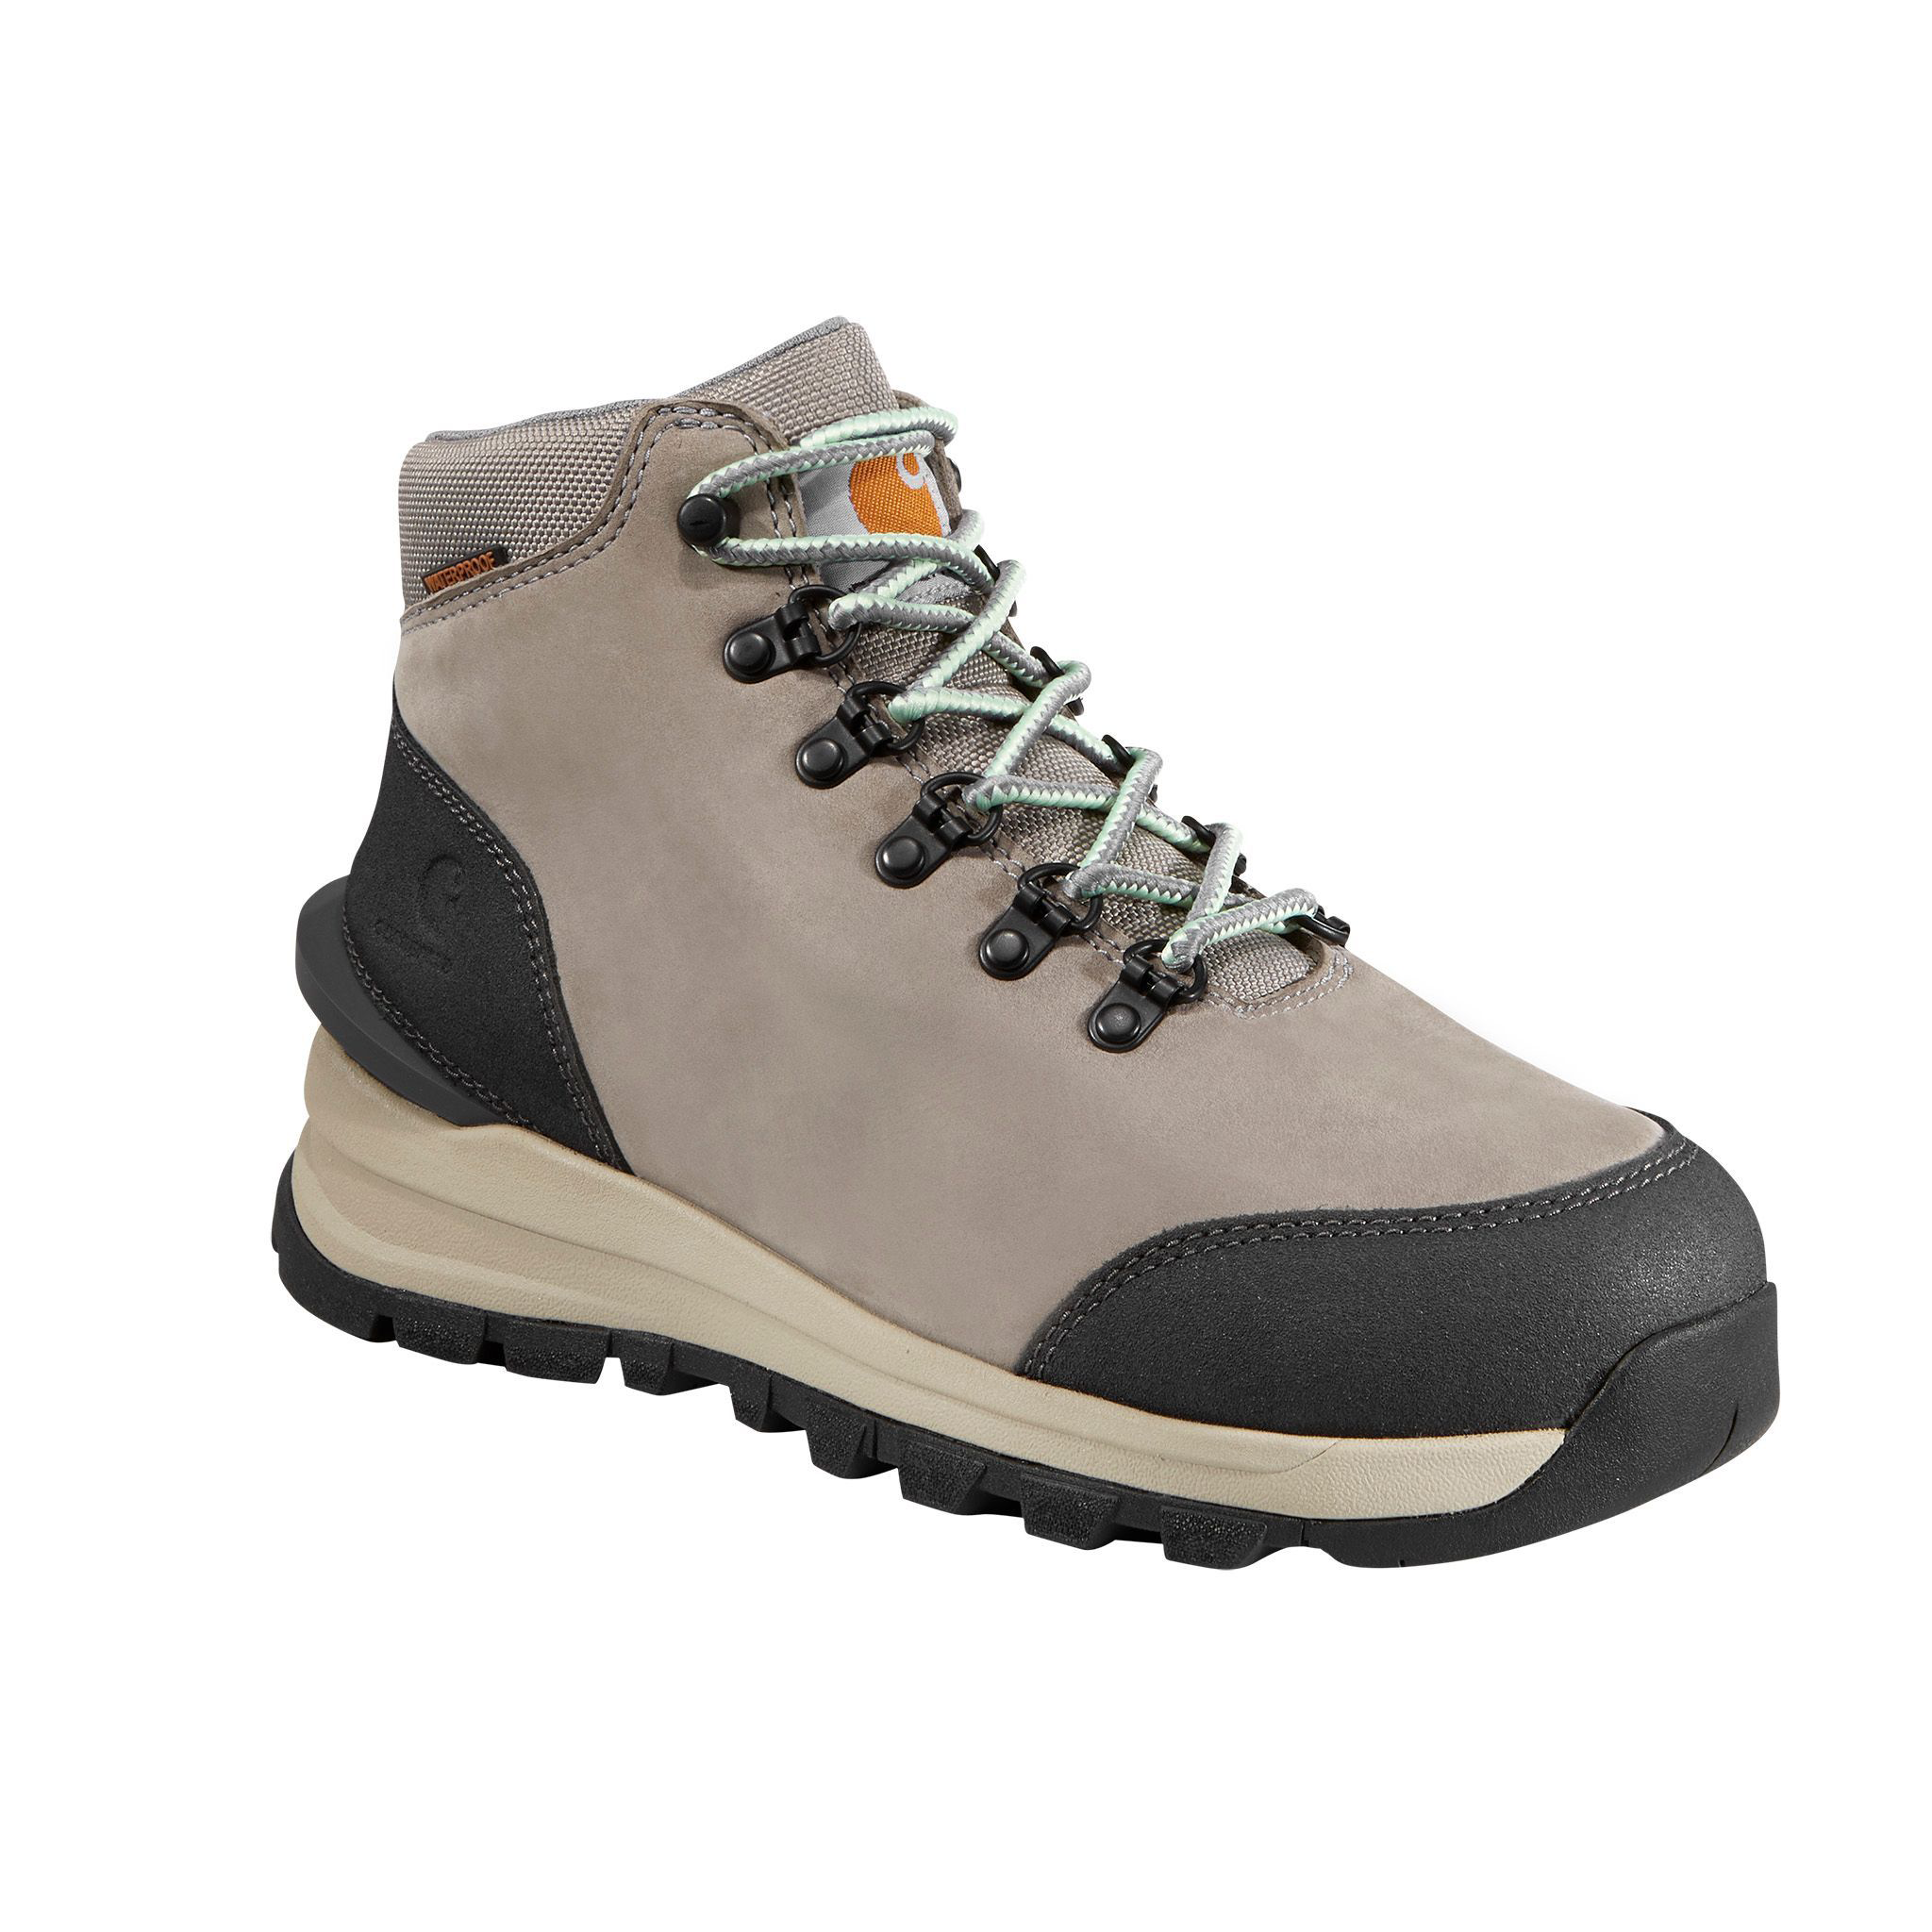 Carhartt Gilmore Waterproof Hiking Boots for Ladies - Grey Nubuck - 10M